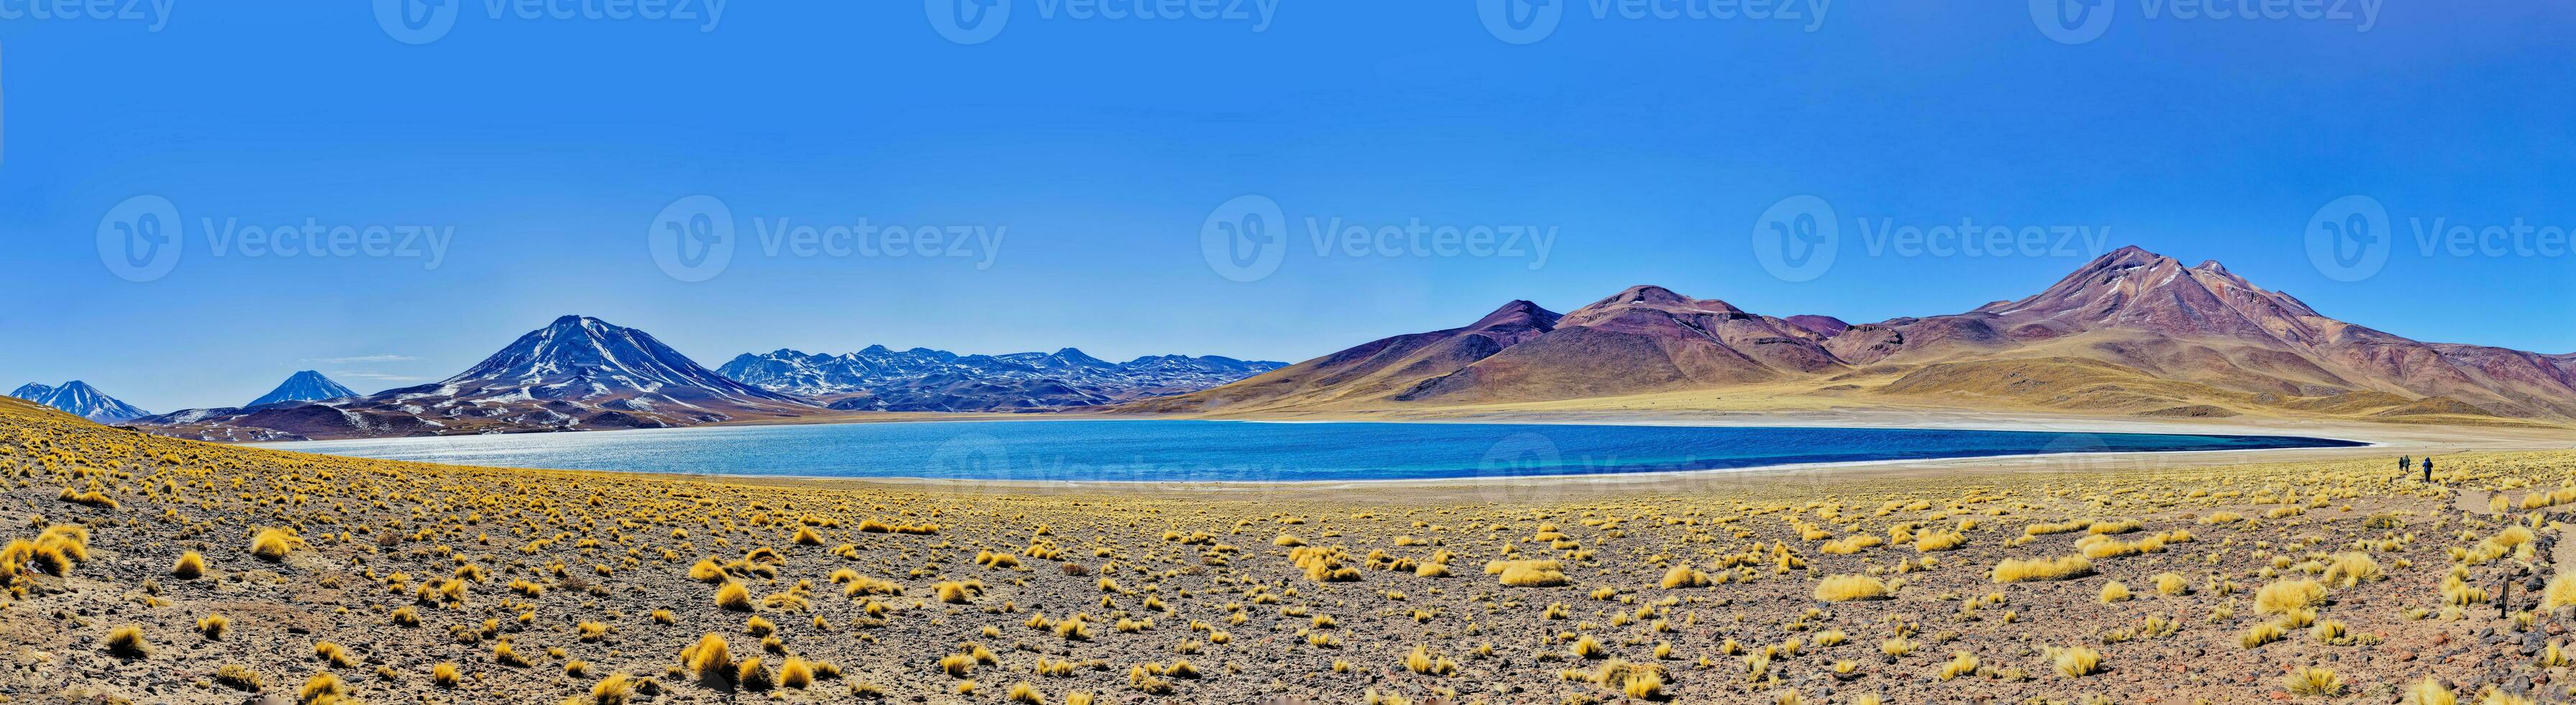 miscanti altiplanique lagune dans le atacama désert - san pedro de atacama. photo